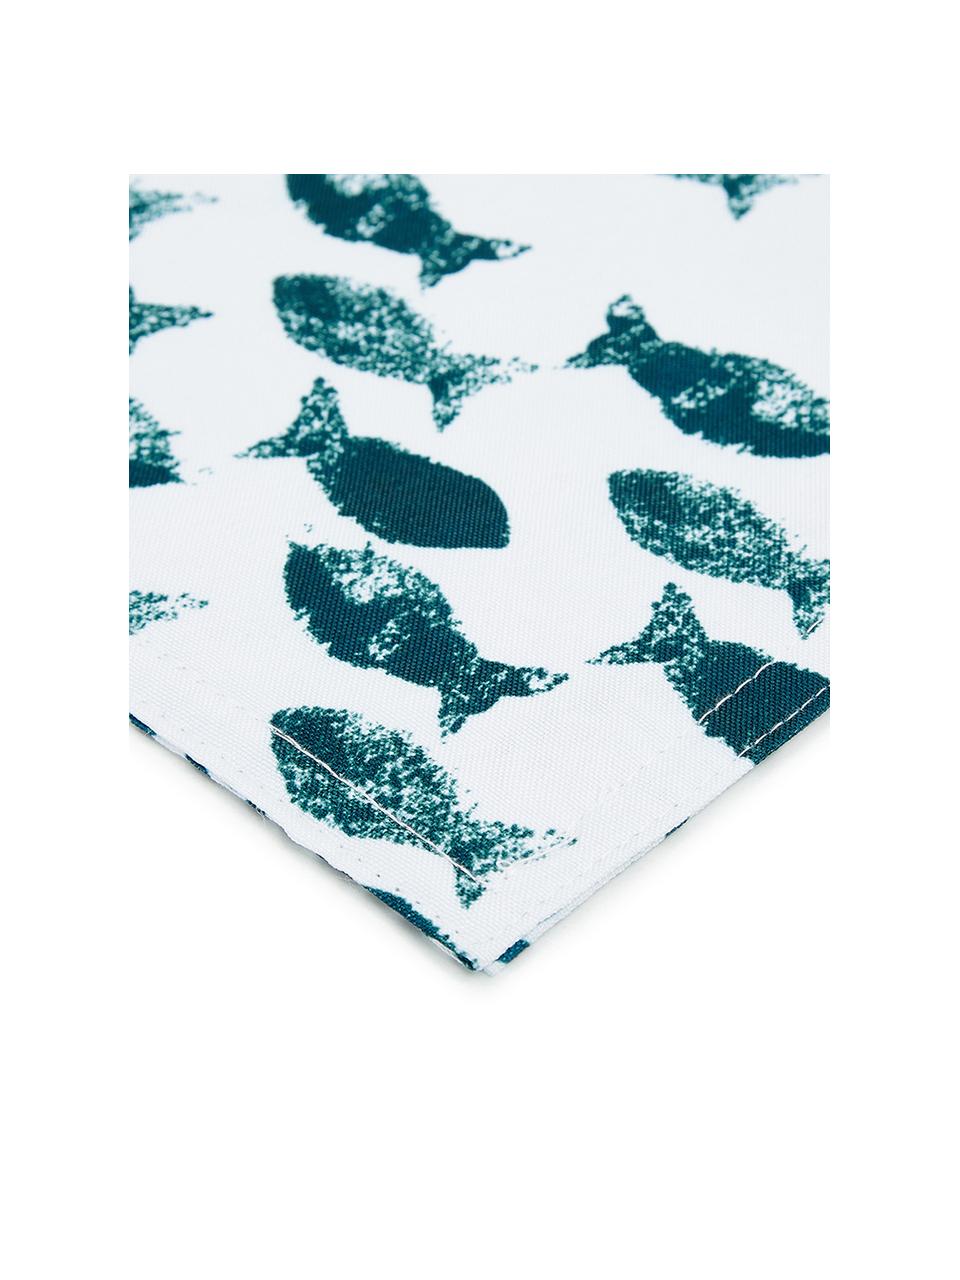 Waterafstotende placemats Fishbone, 2 stuks, Polyester, Wit, blauwtinten, B 33 x L 48 cm